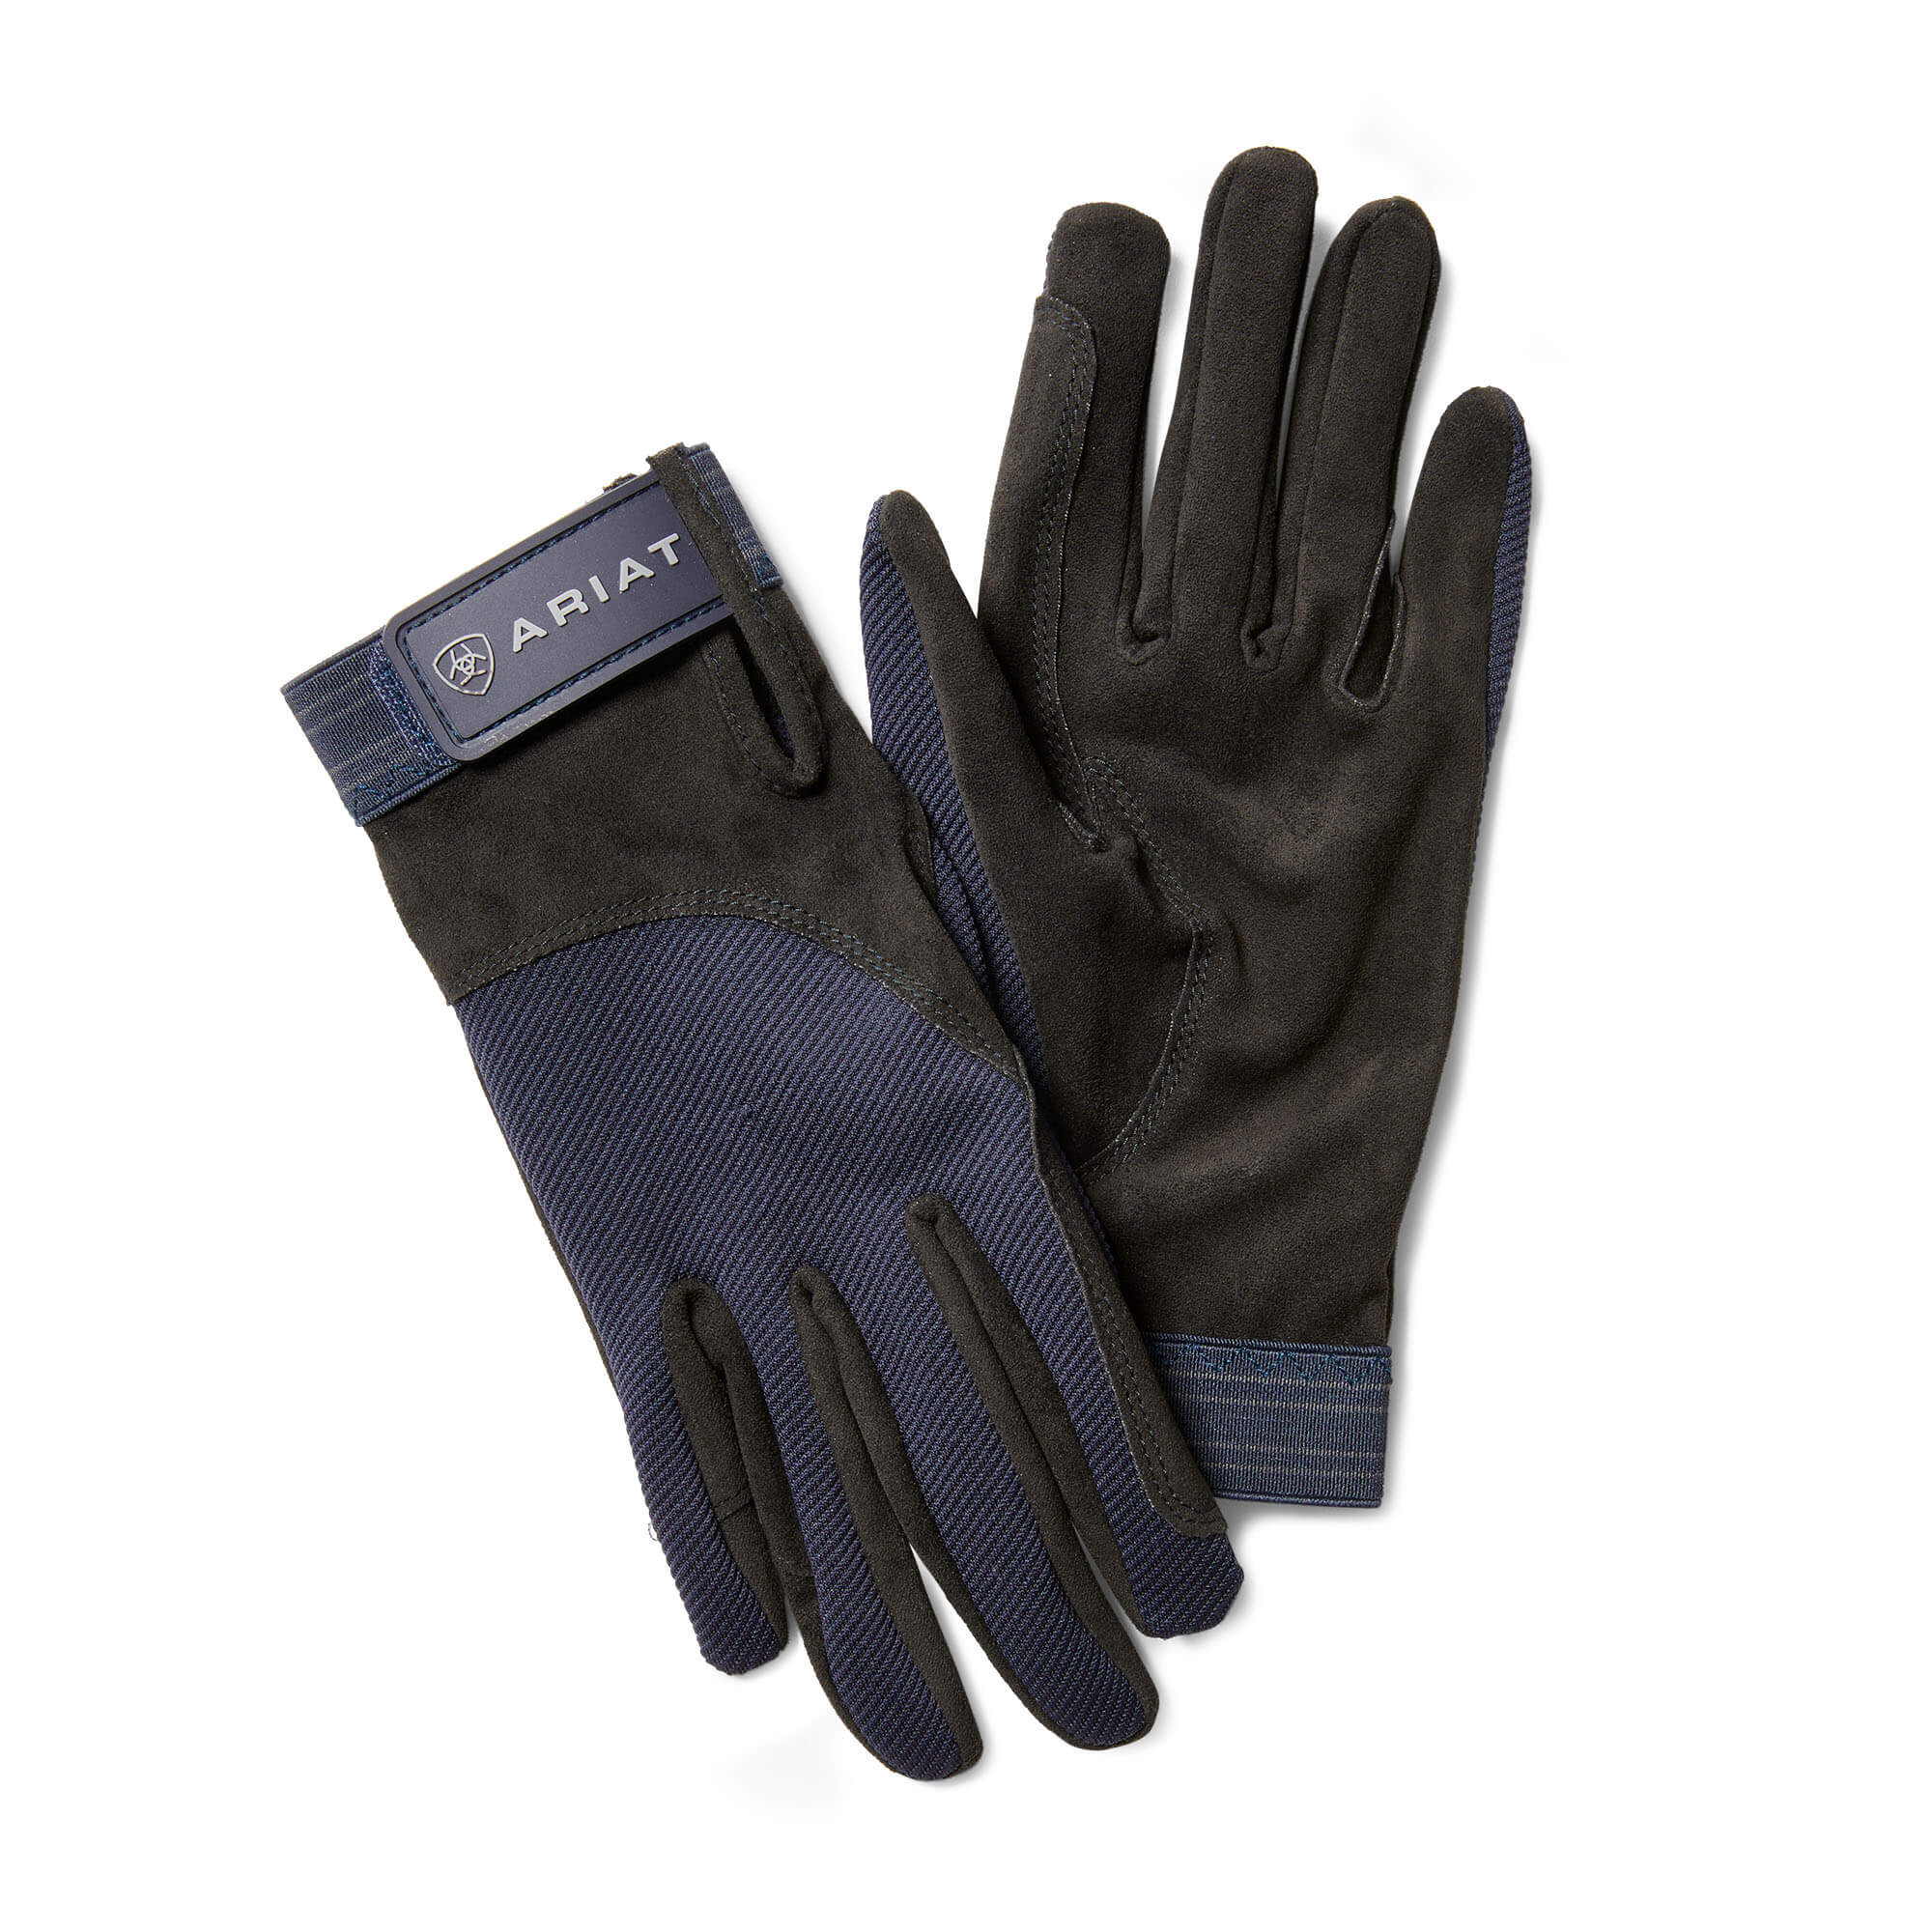 50% OFF ARIAT Tek Grip Riding Gloves - Navy - Size: 7